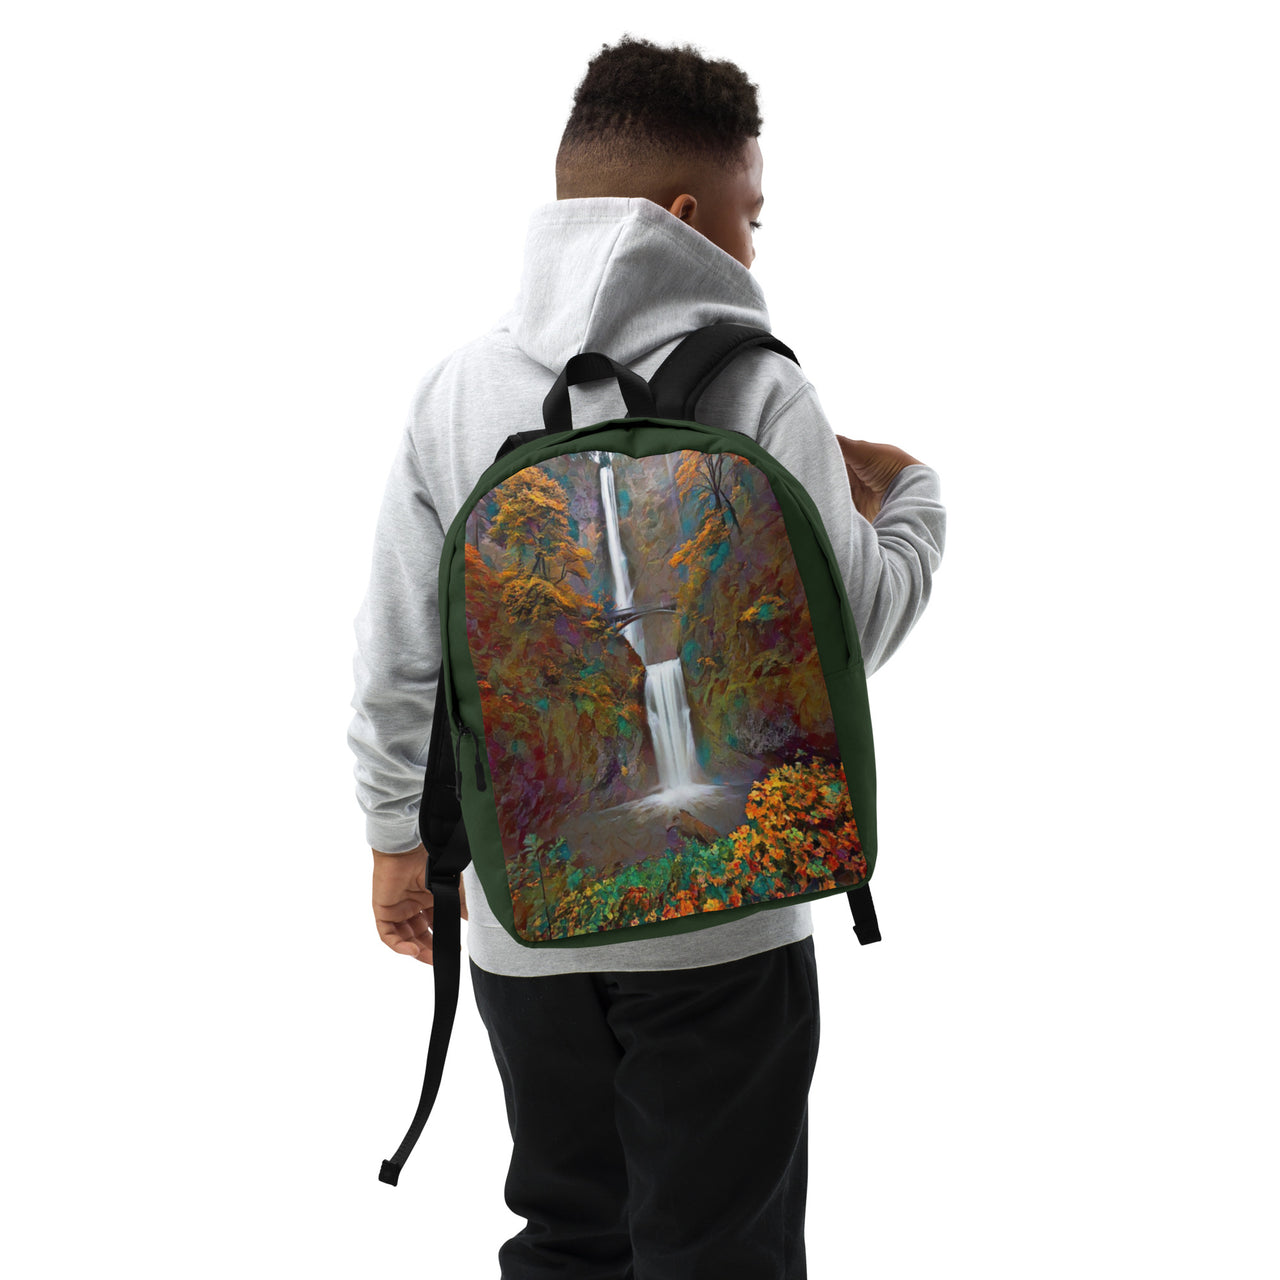 Multnomah Falls - Digital Art - Minimalist Backpack